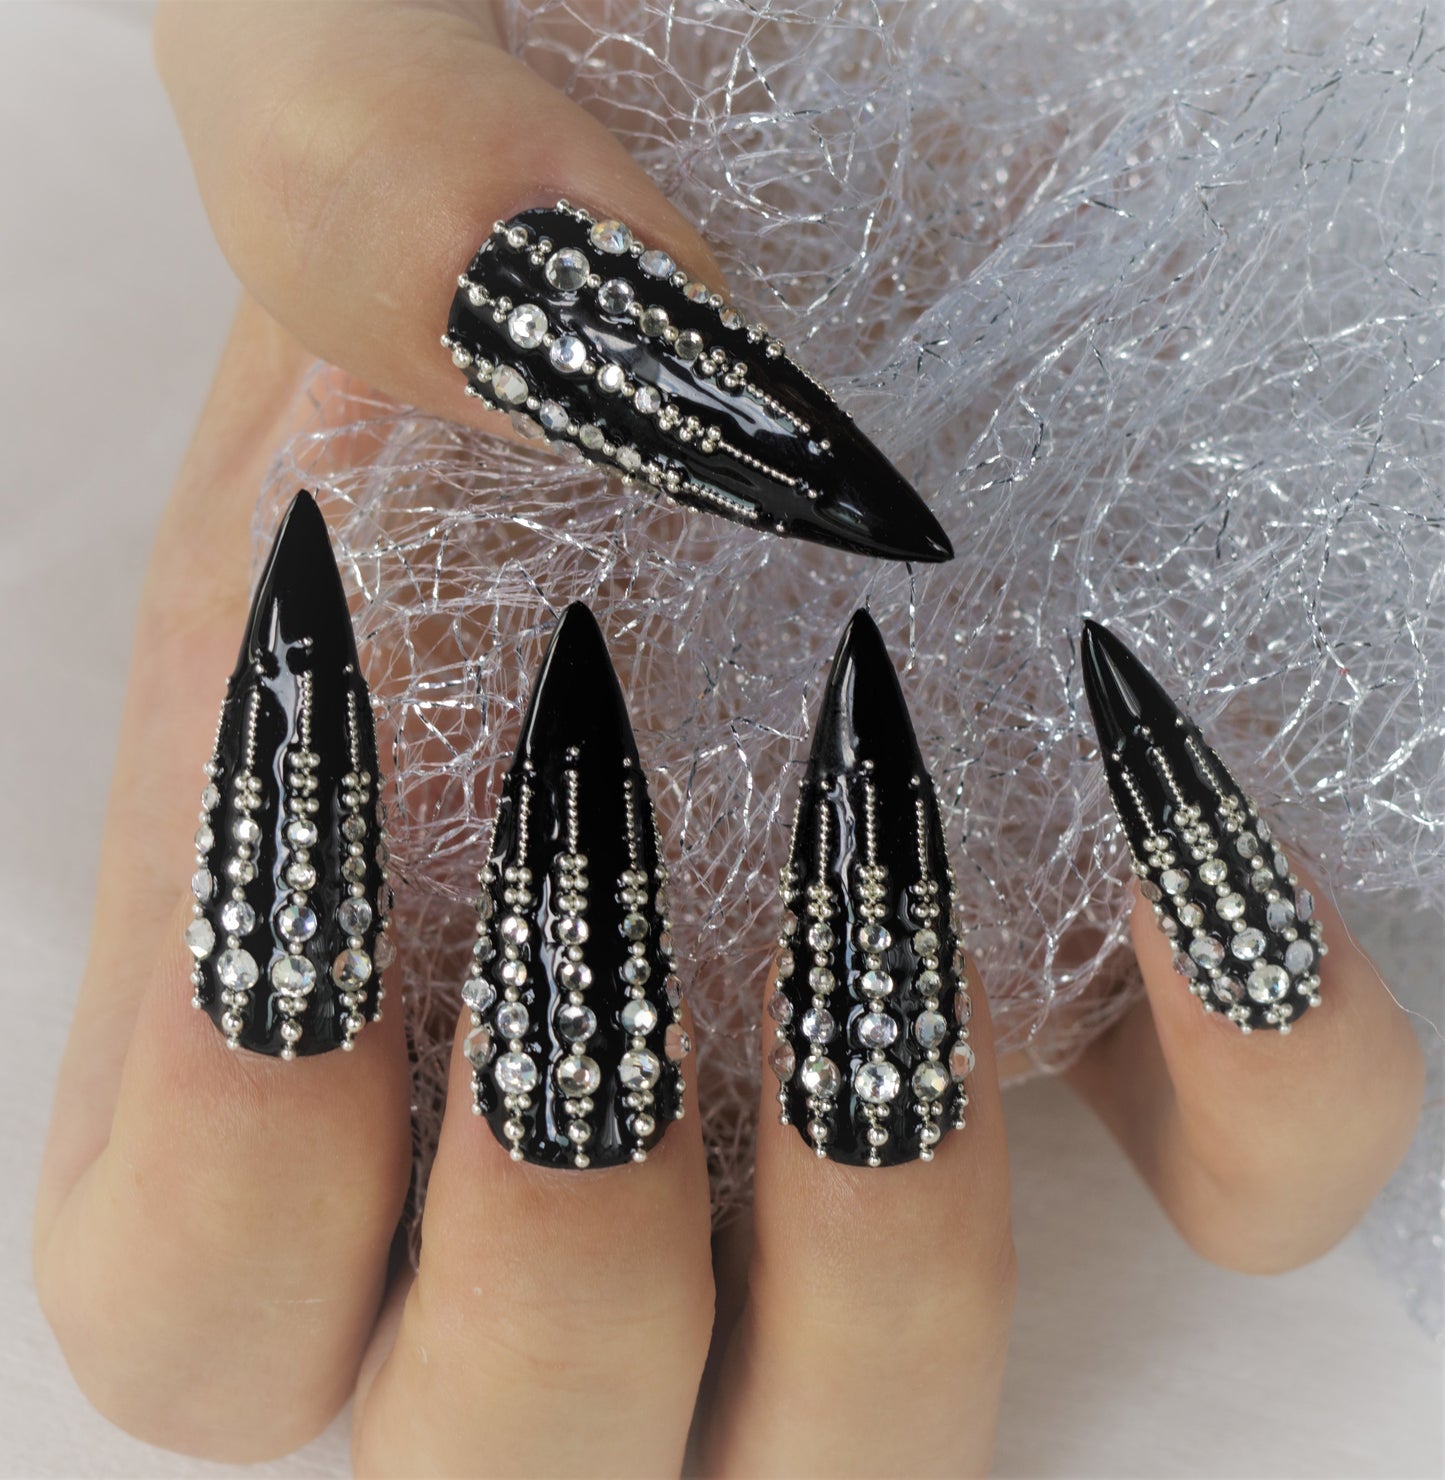    Black Diamond Press on Nails